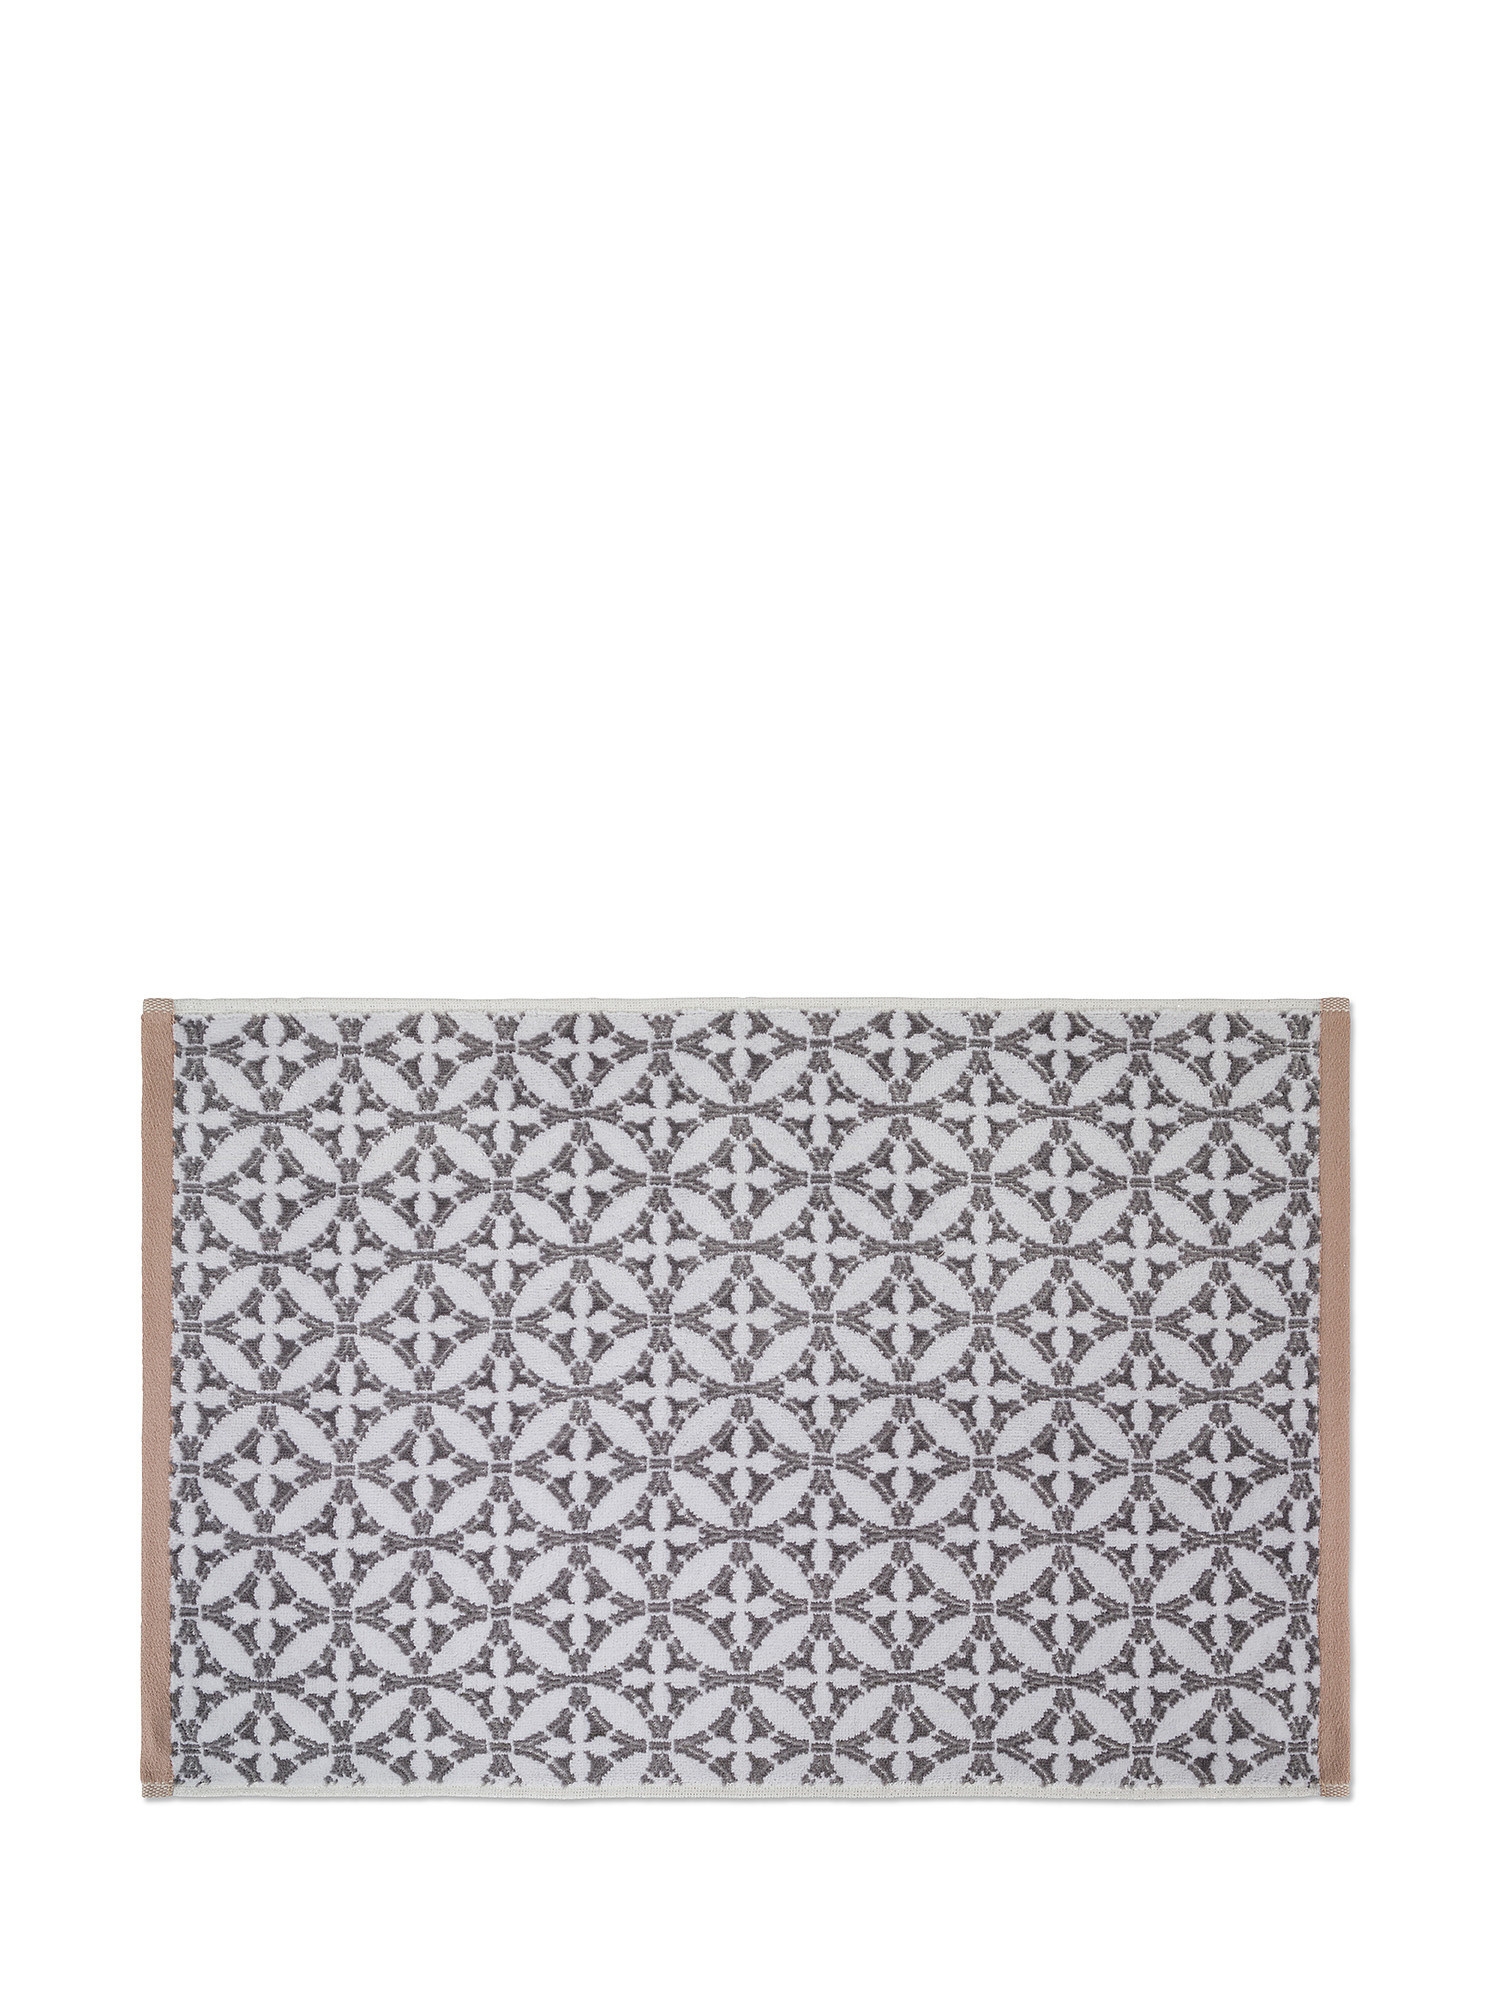 Asciugamano cotone velour motivo geometrico Portofino, Bianco/Grigio, large image number 1